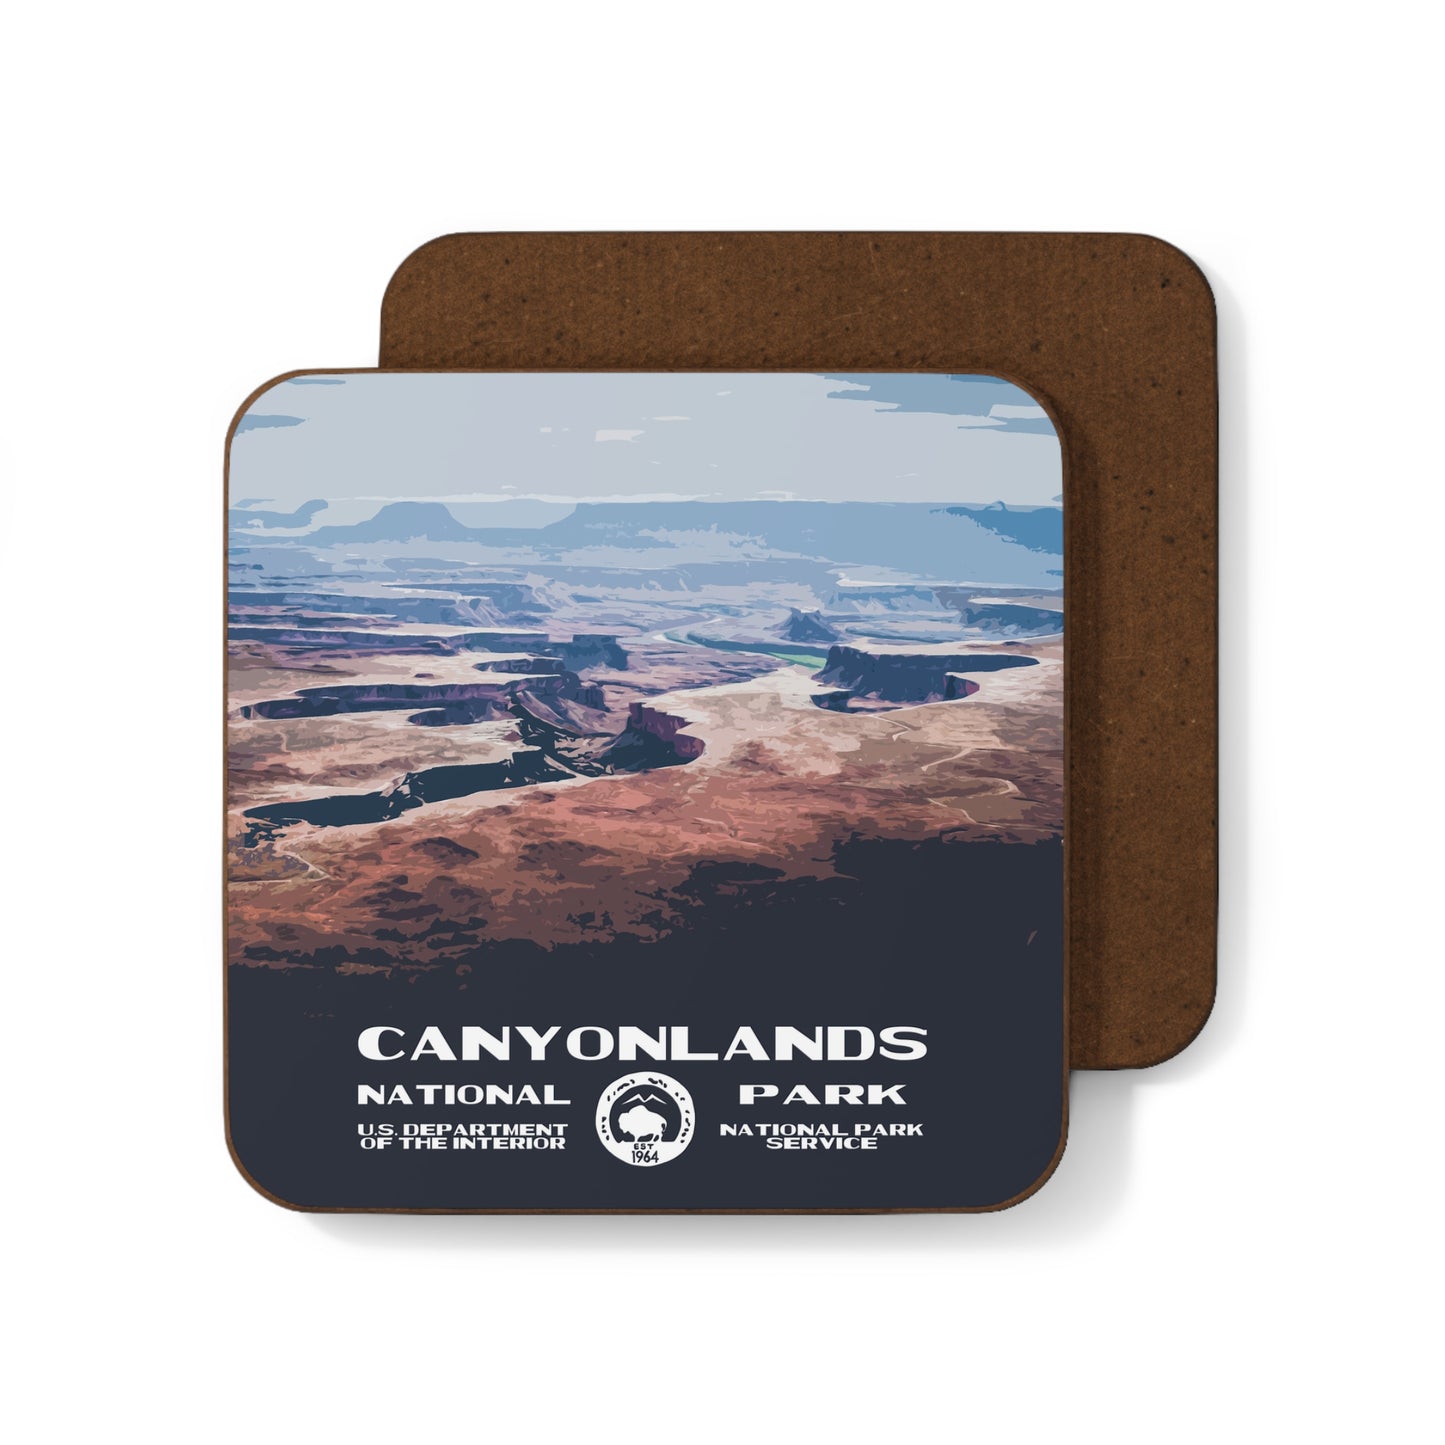 Canyonlands National Park Coaster